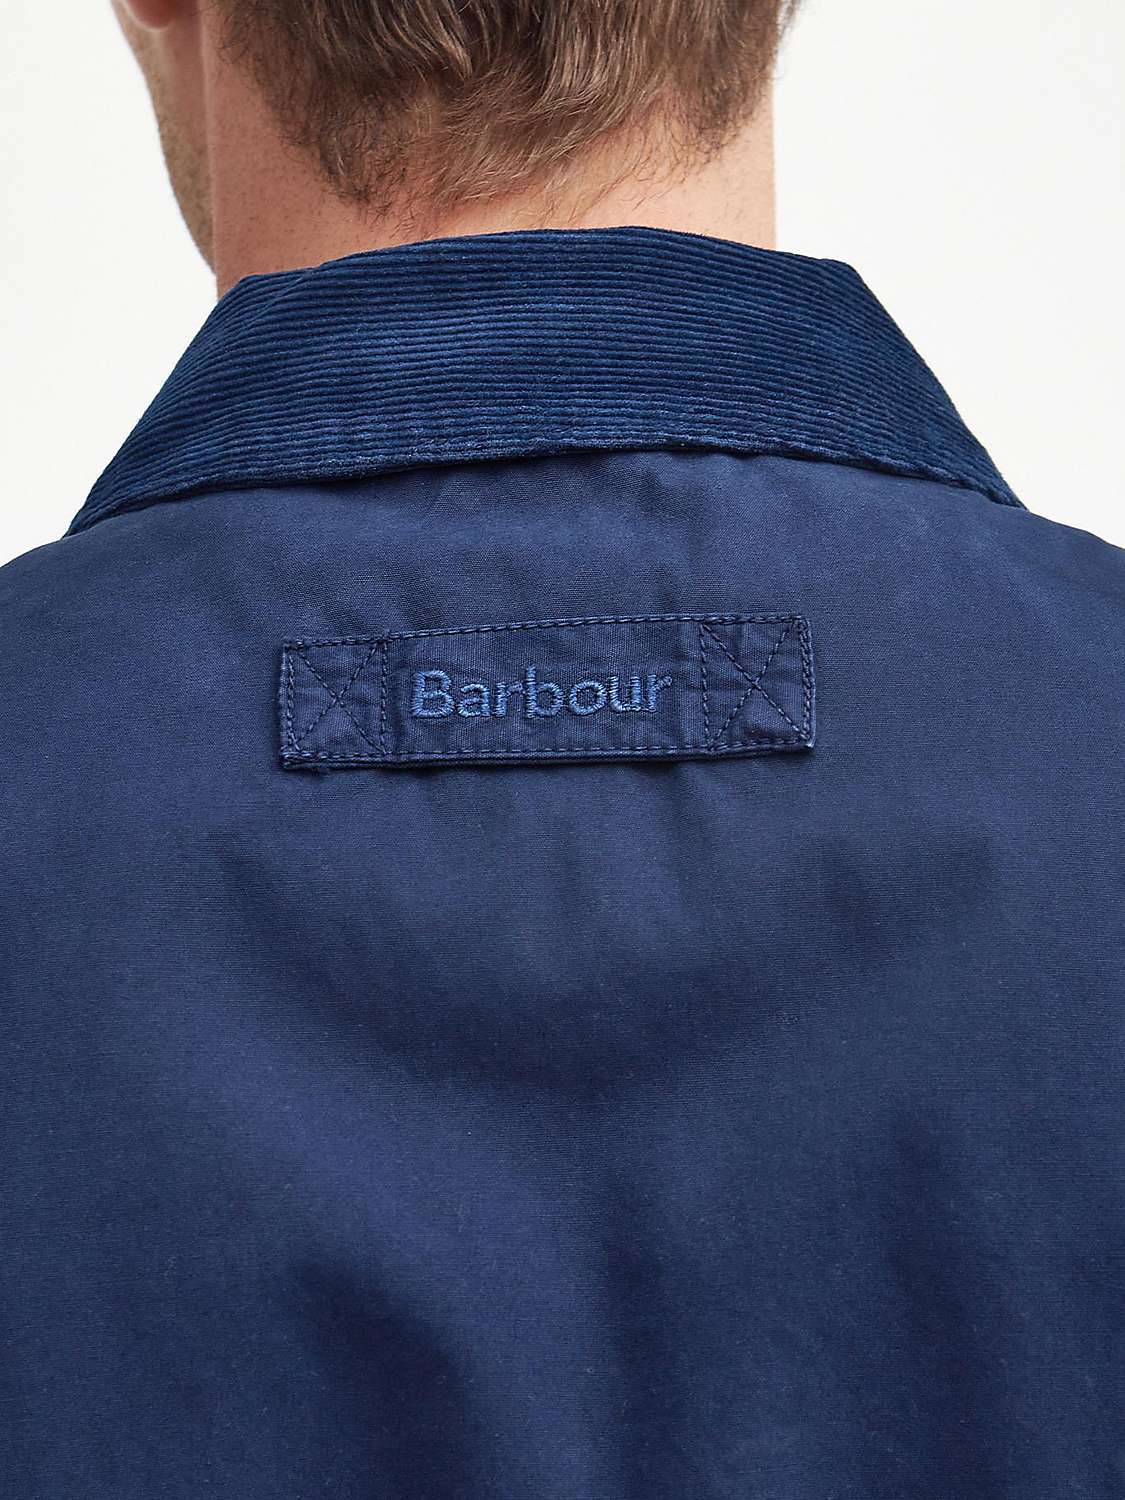 Buy Barbour Cotton Salter Overshirt, Navy Online at johnlewis.com